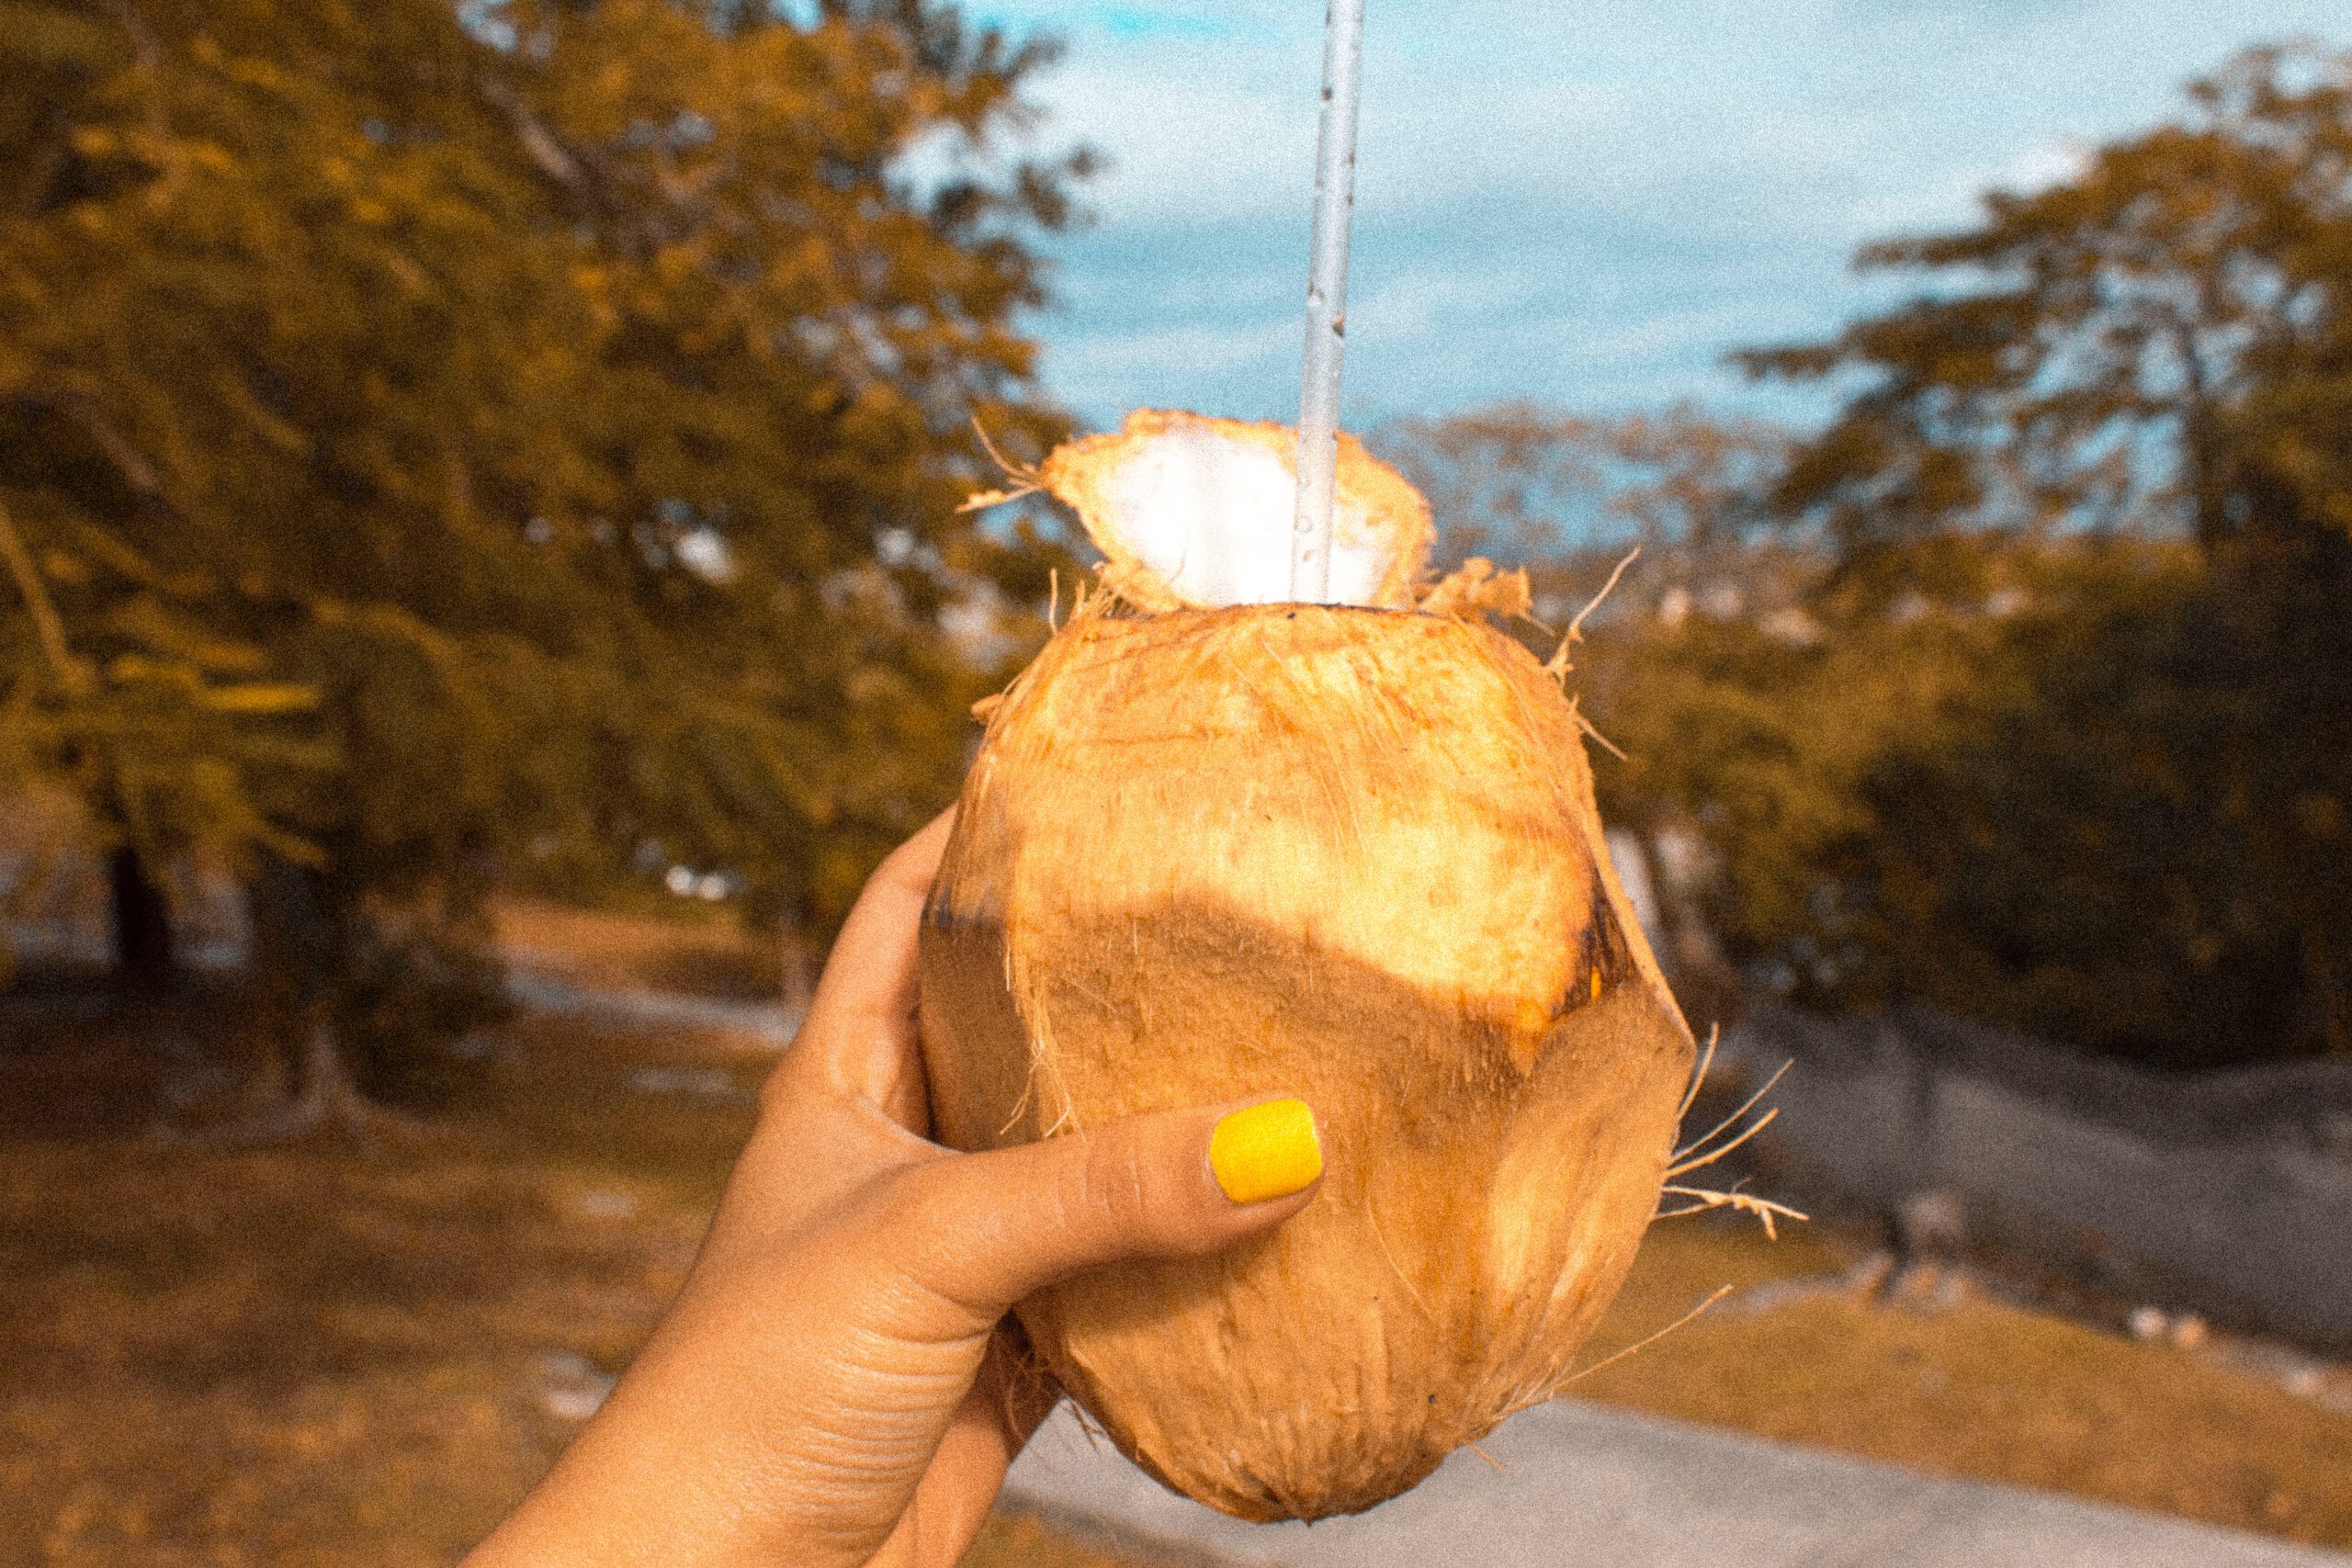 bahamas-cococay-coconut-kokosnoot-drinken-kokos-natuur